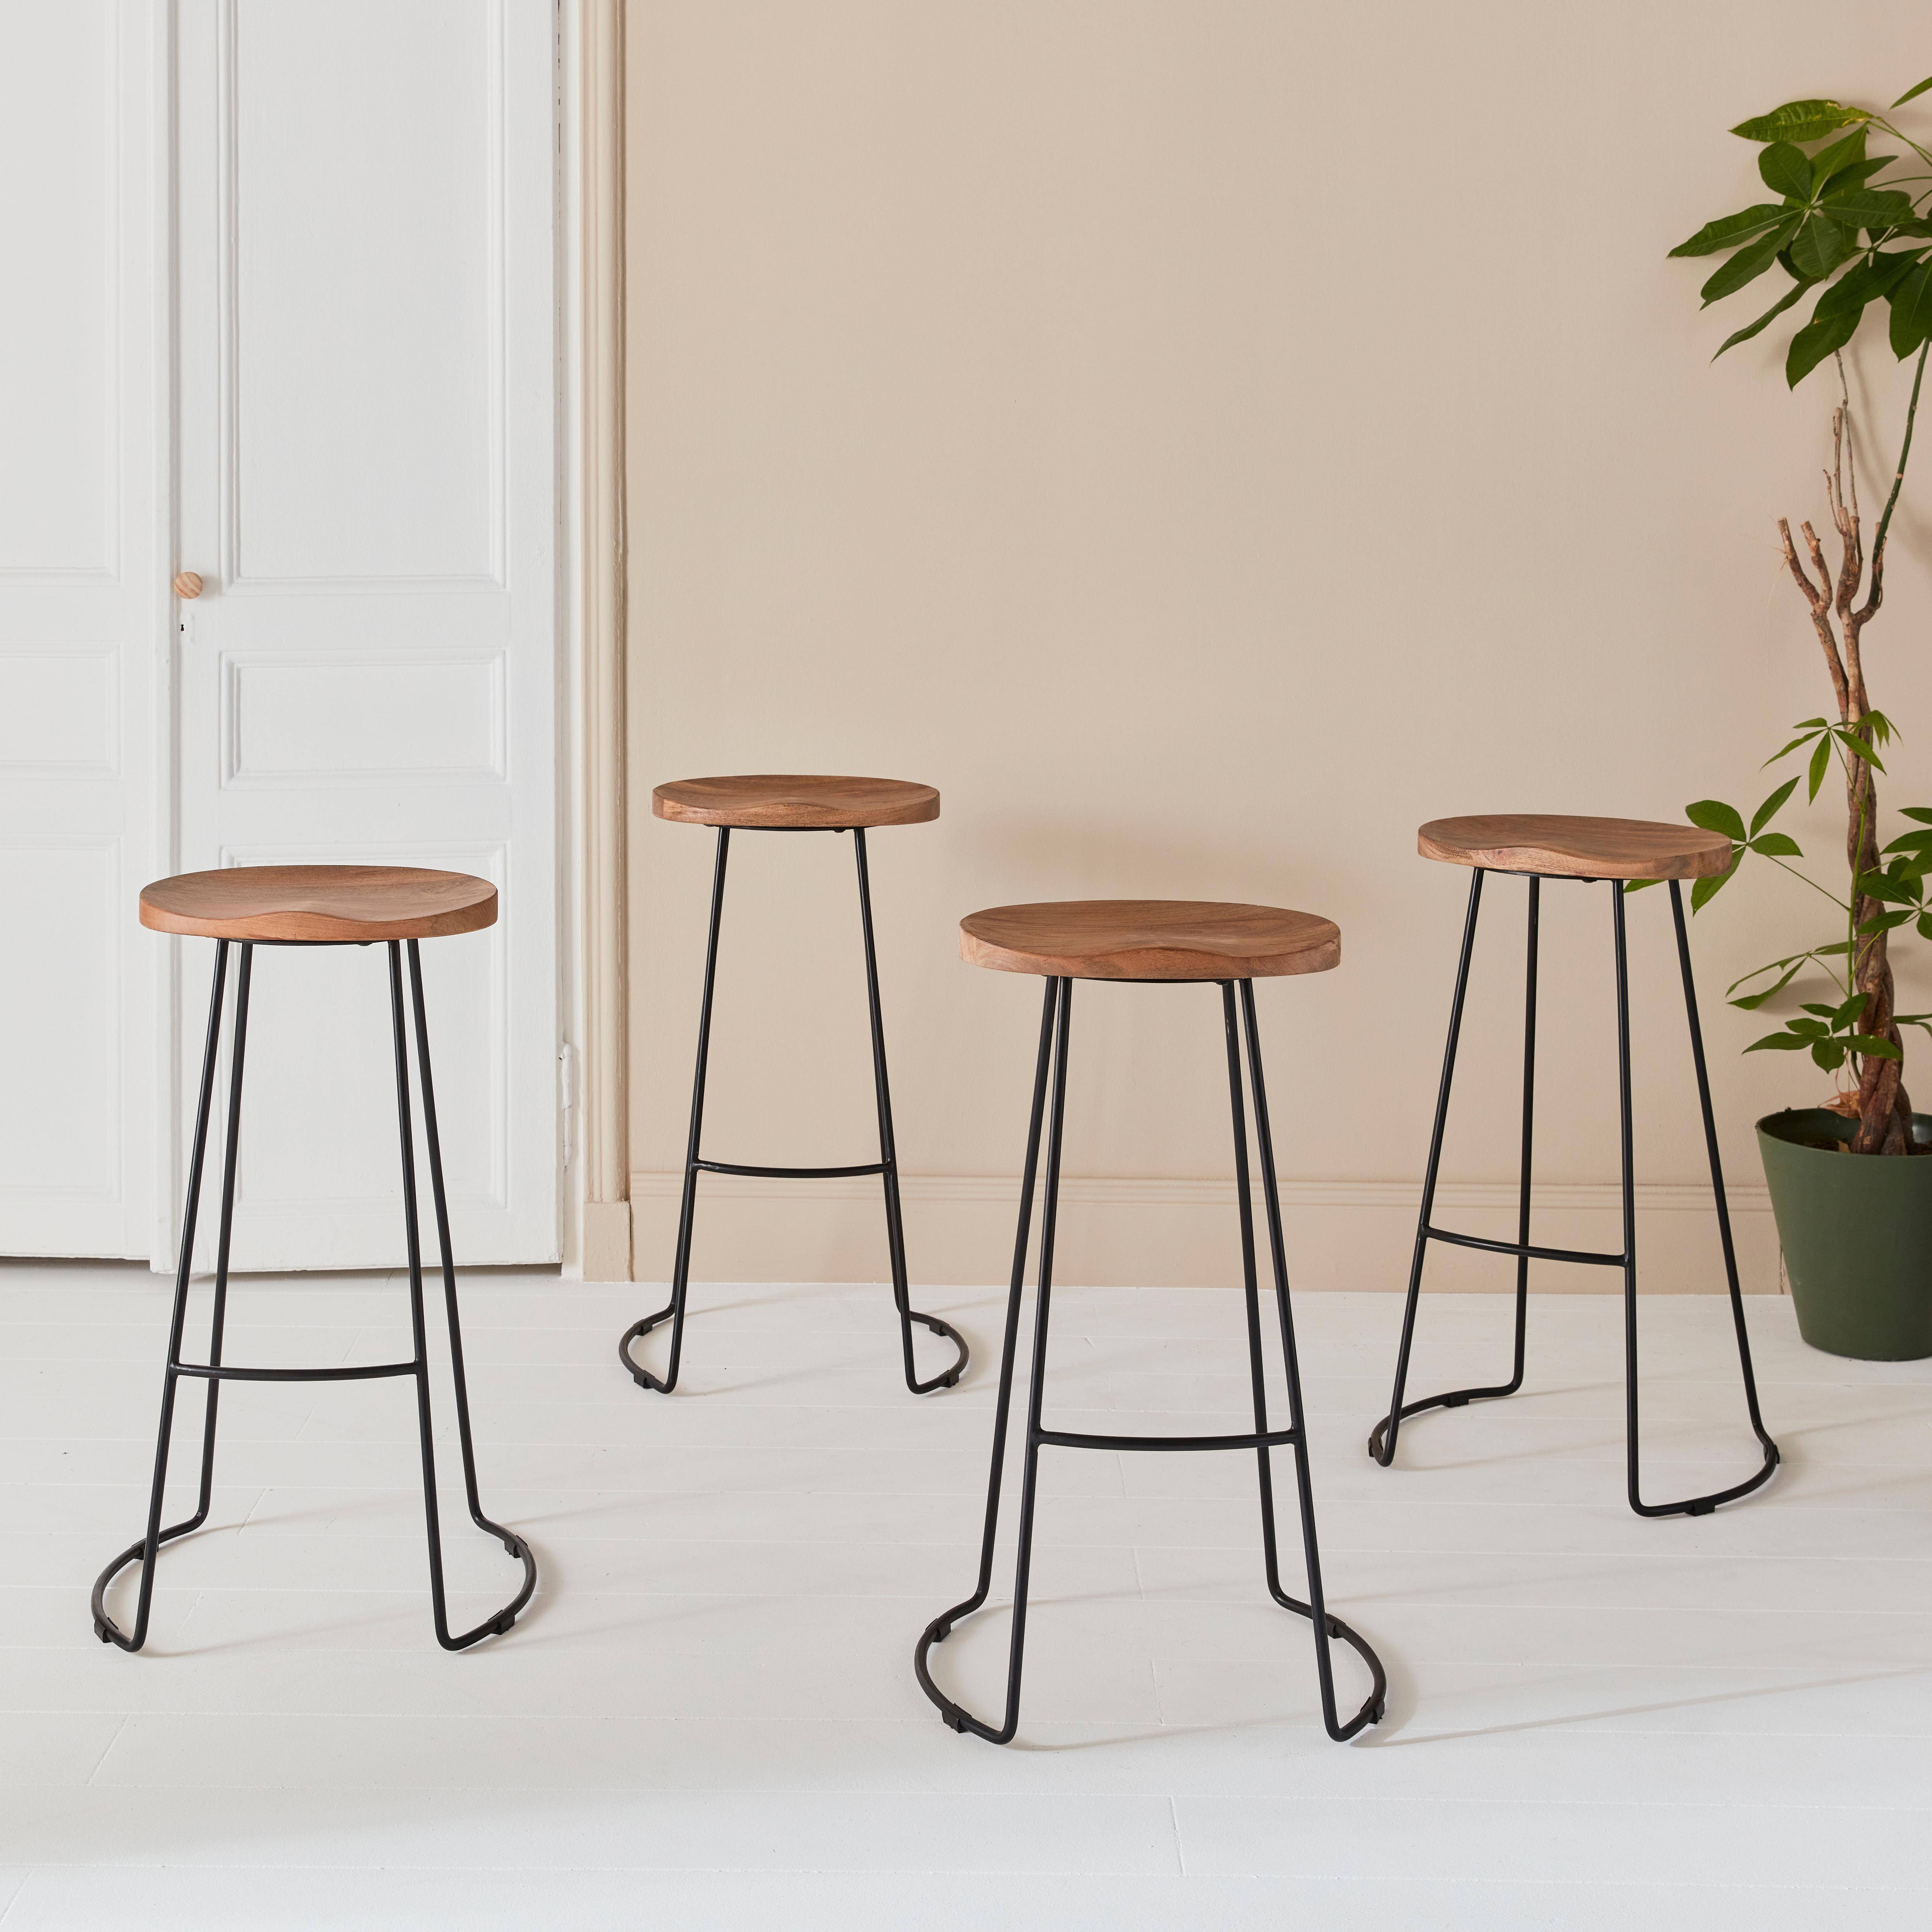 Set of 4 industrial metal and wooden bar stools, 47x40x75cm, Jaya, Mango wood seat, black metal legs,sweeek,Photo1